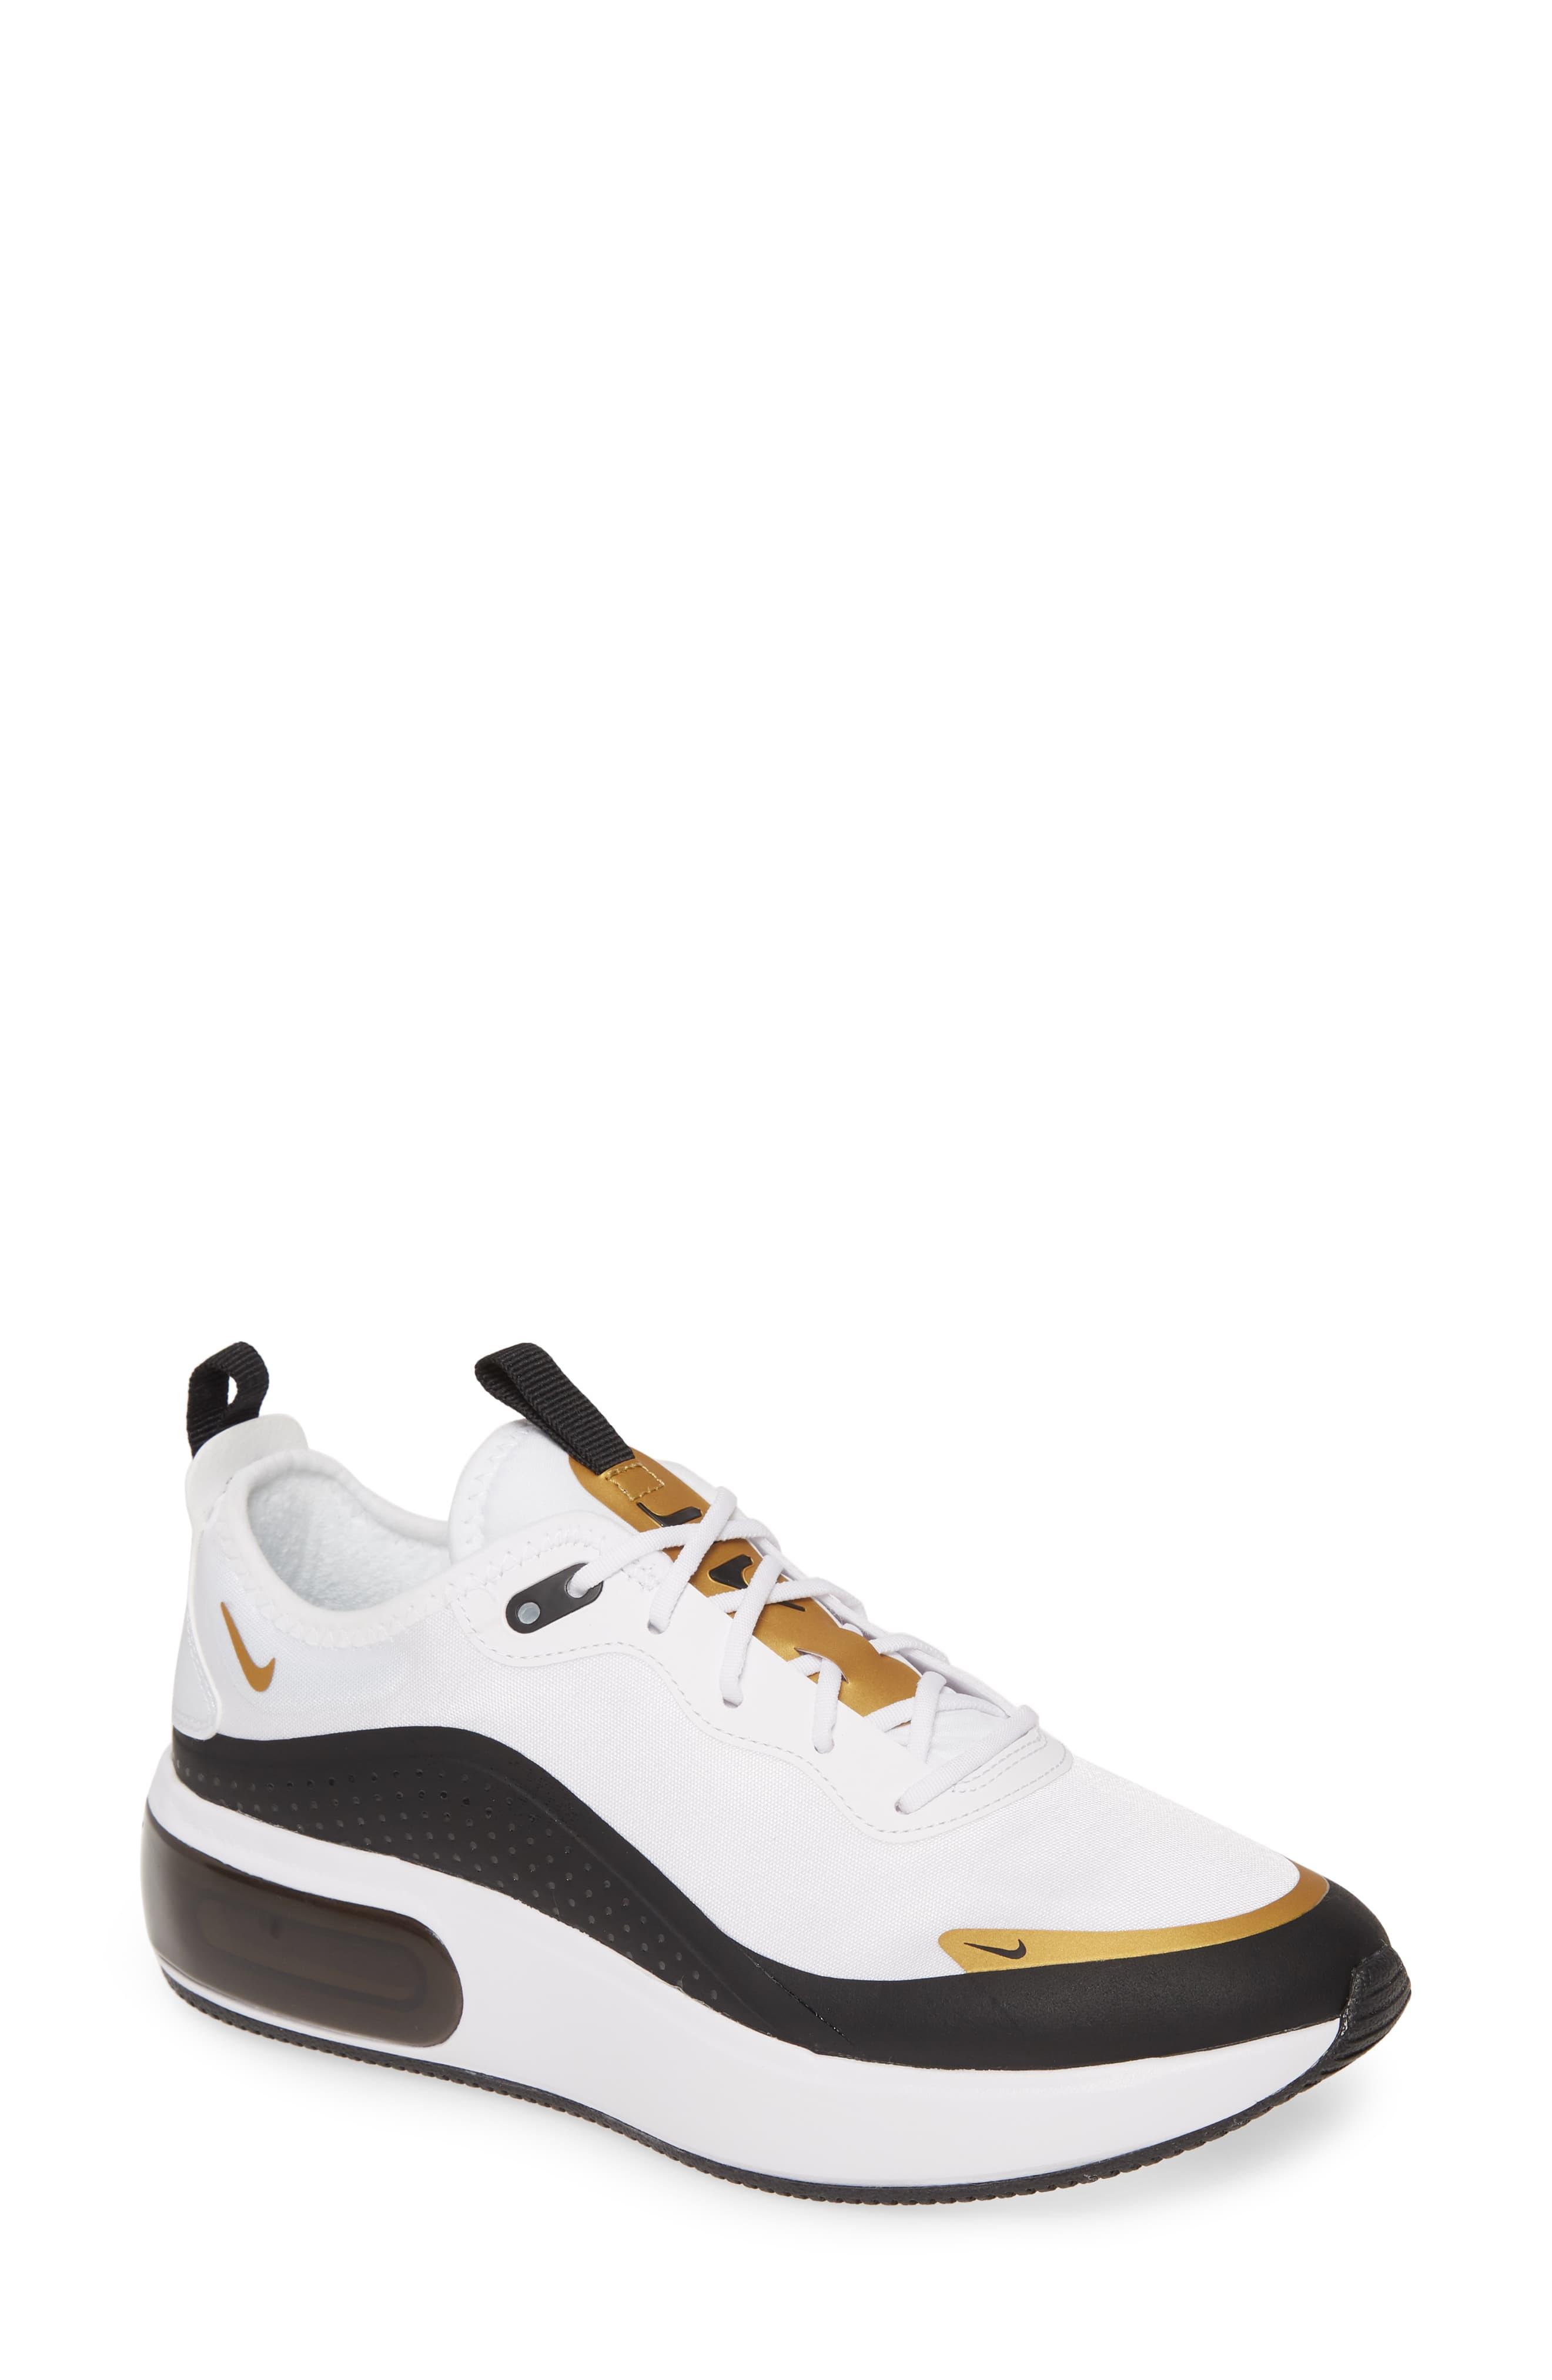 Nike Rubber Air Max Dia Sneaker in White/ Black/ Gold/ Platinum (White) |  Lyst